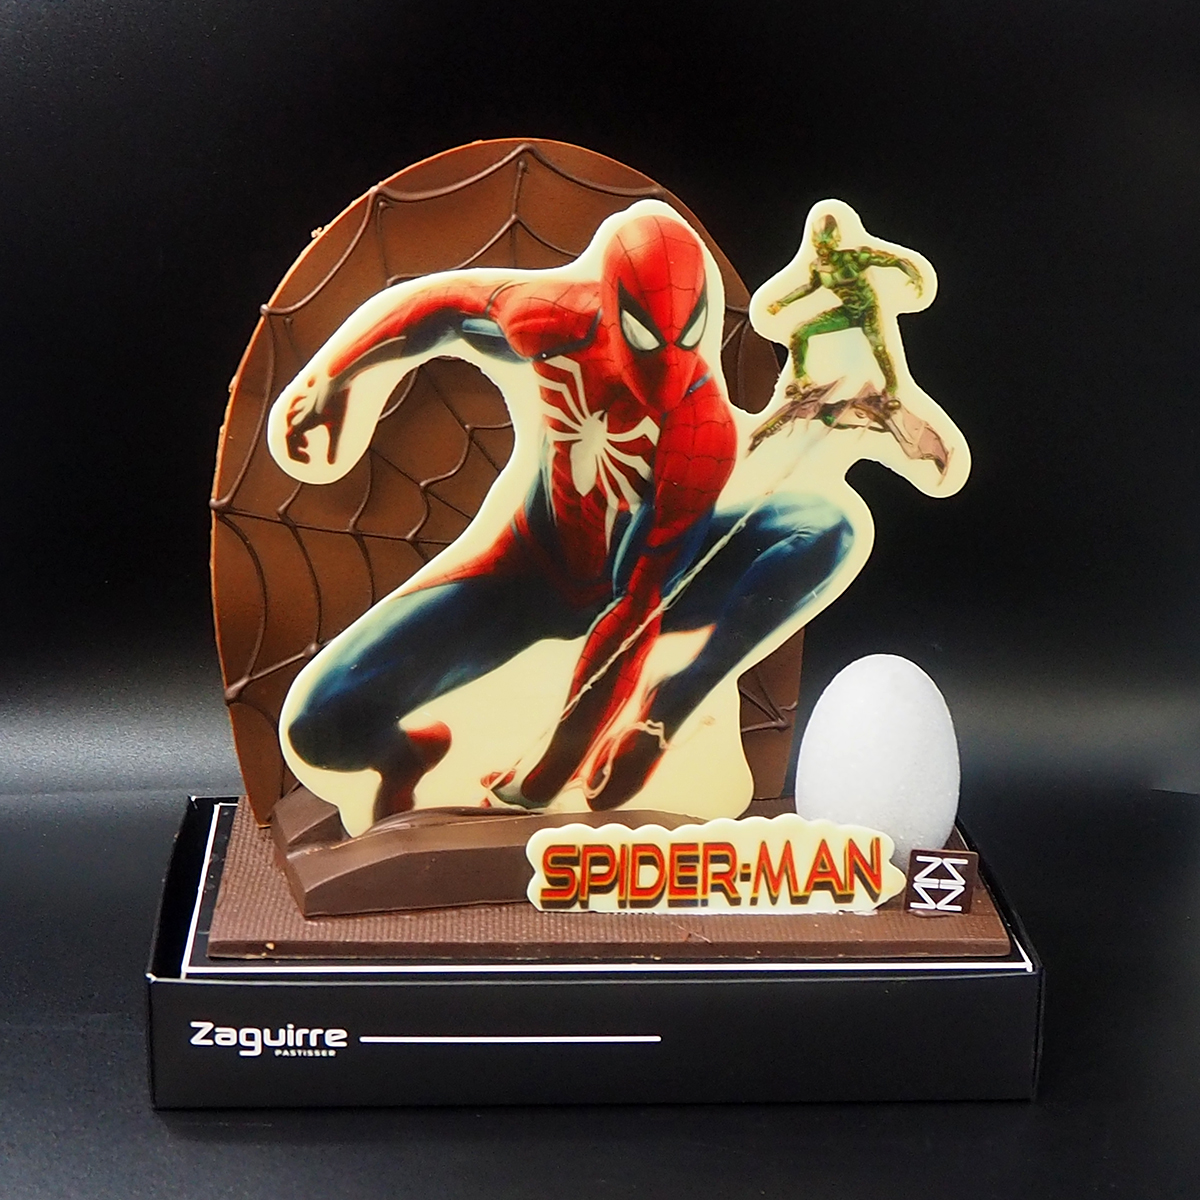 Mona de Pasqua de xocolata de Spiderman de Marvel elaborada per Zaguirre Pastisser.